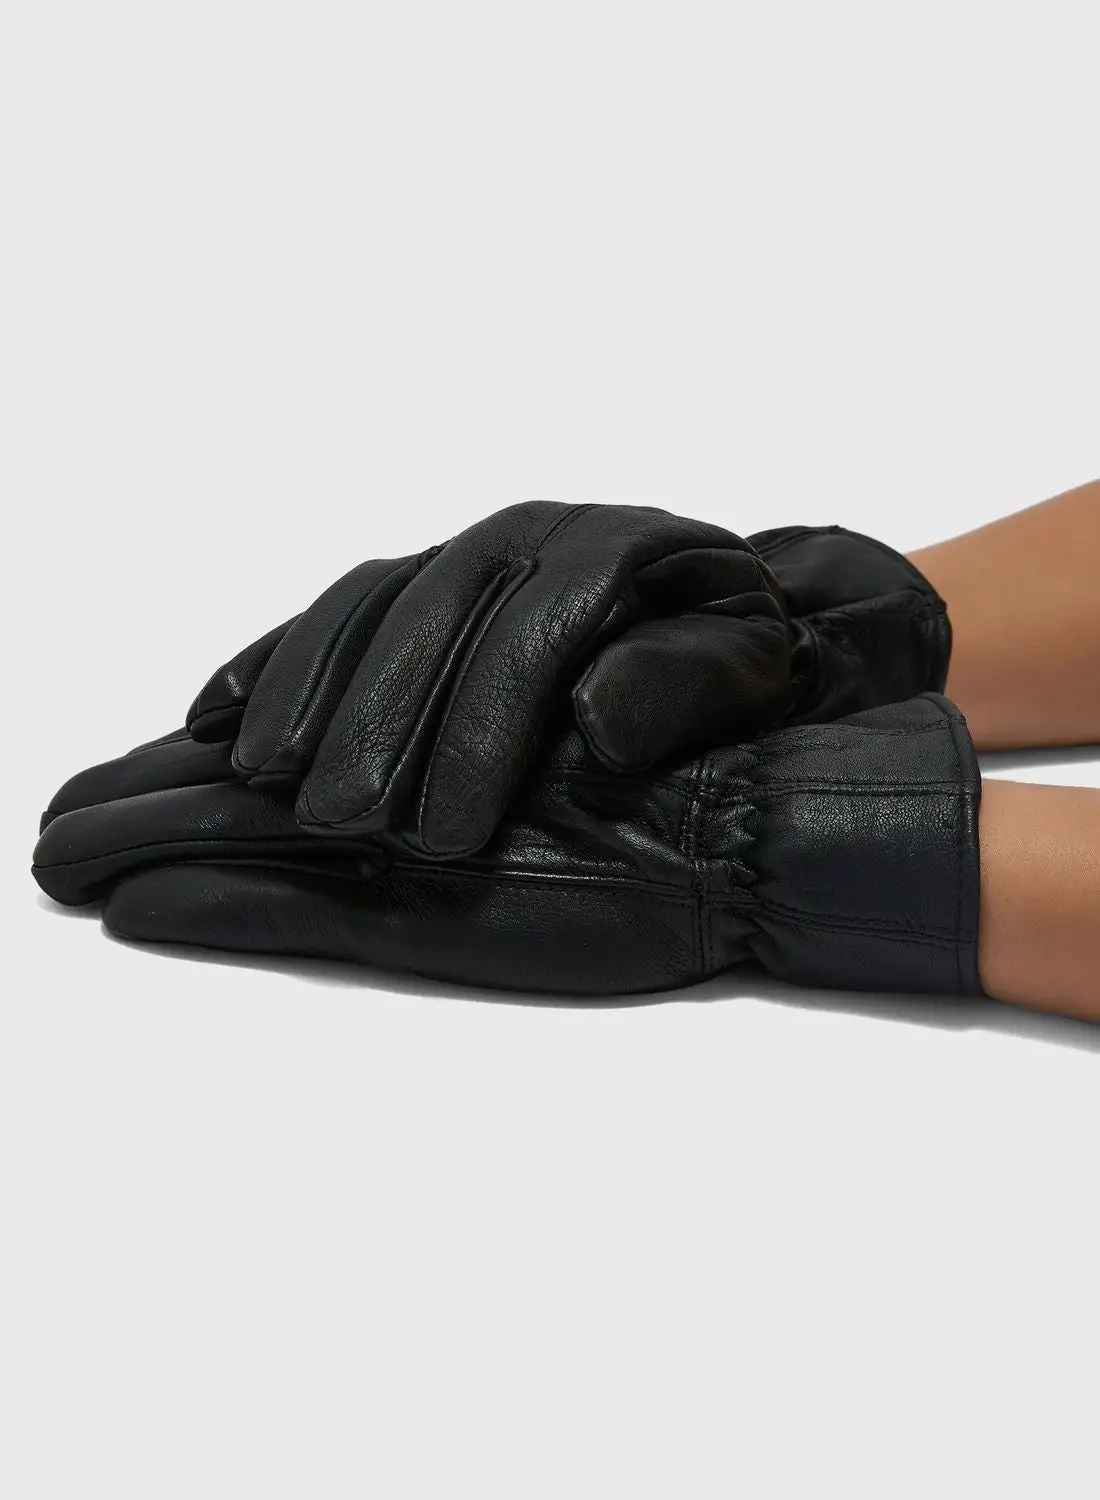 Robert Wood Genuine Leather Winter Gloves